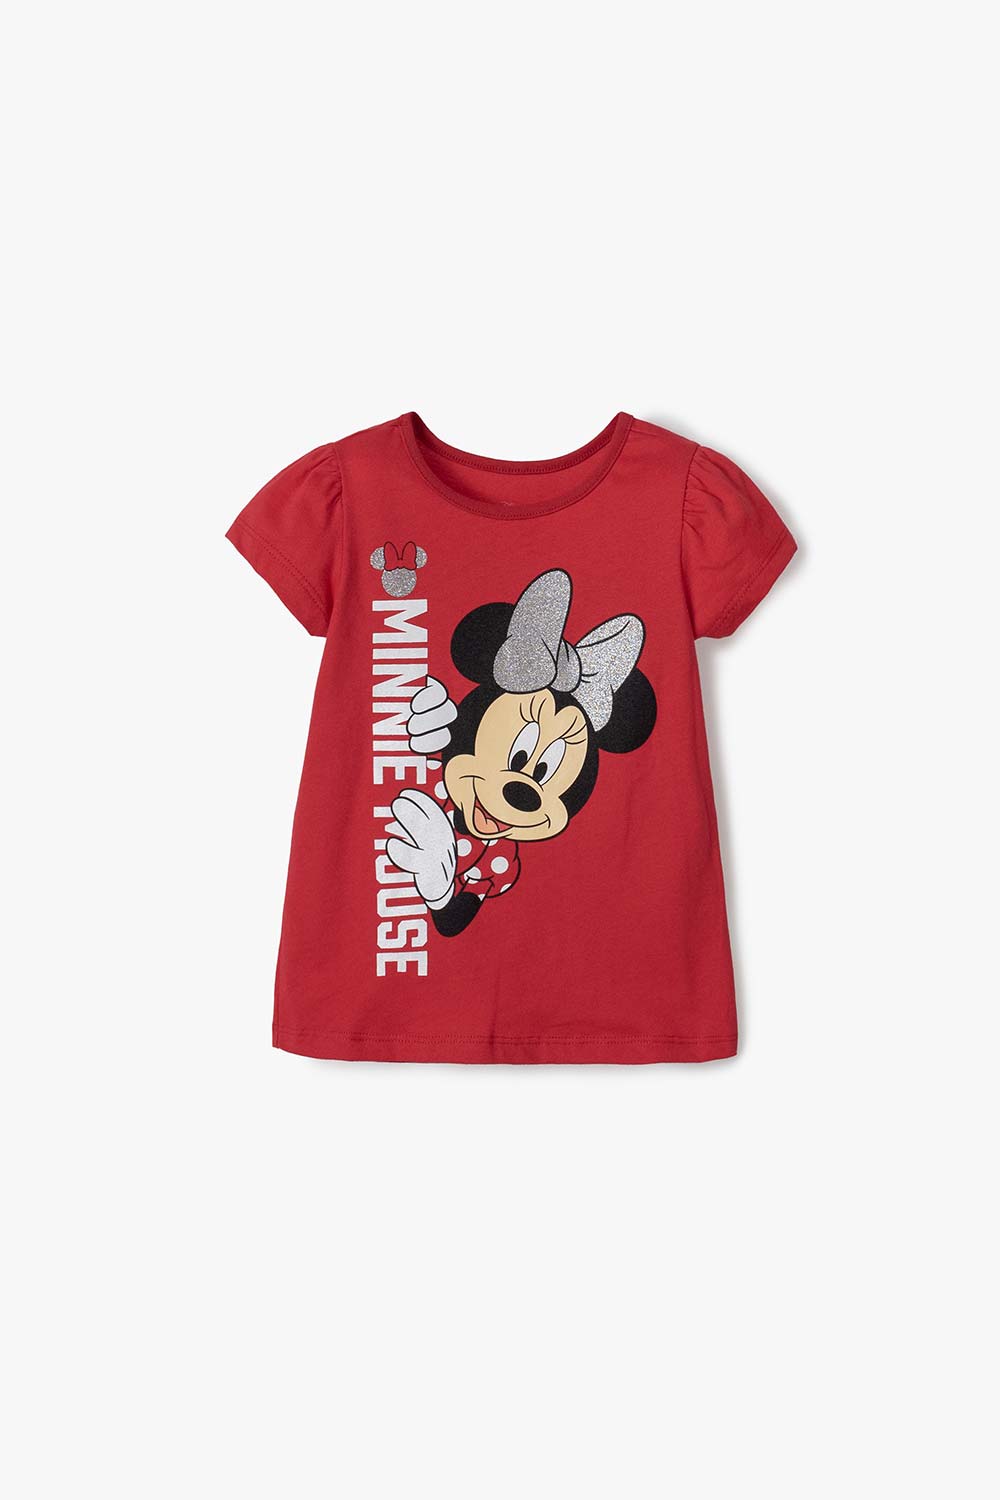 Camiseta de Minnie Mouse roja manga corta para niña 2T a 5T 2T-0